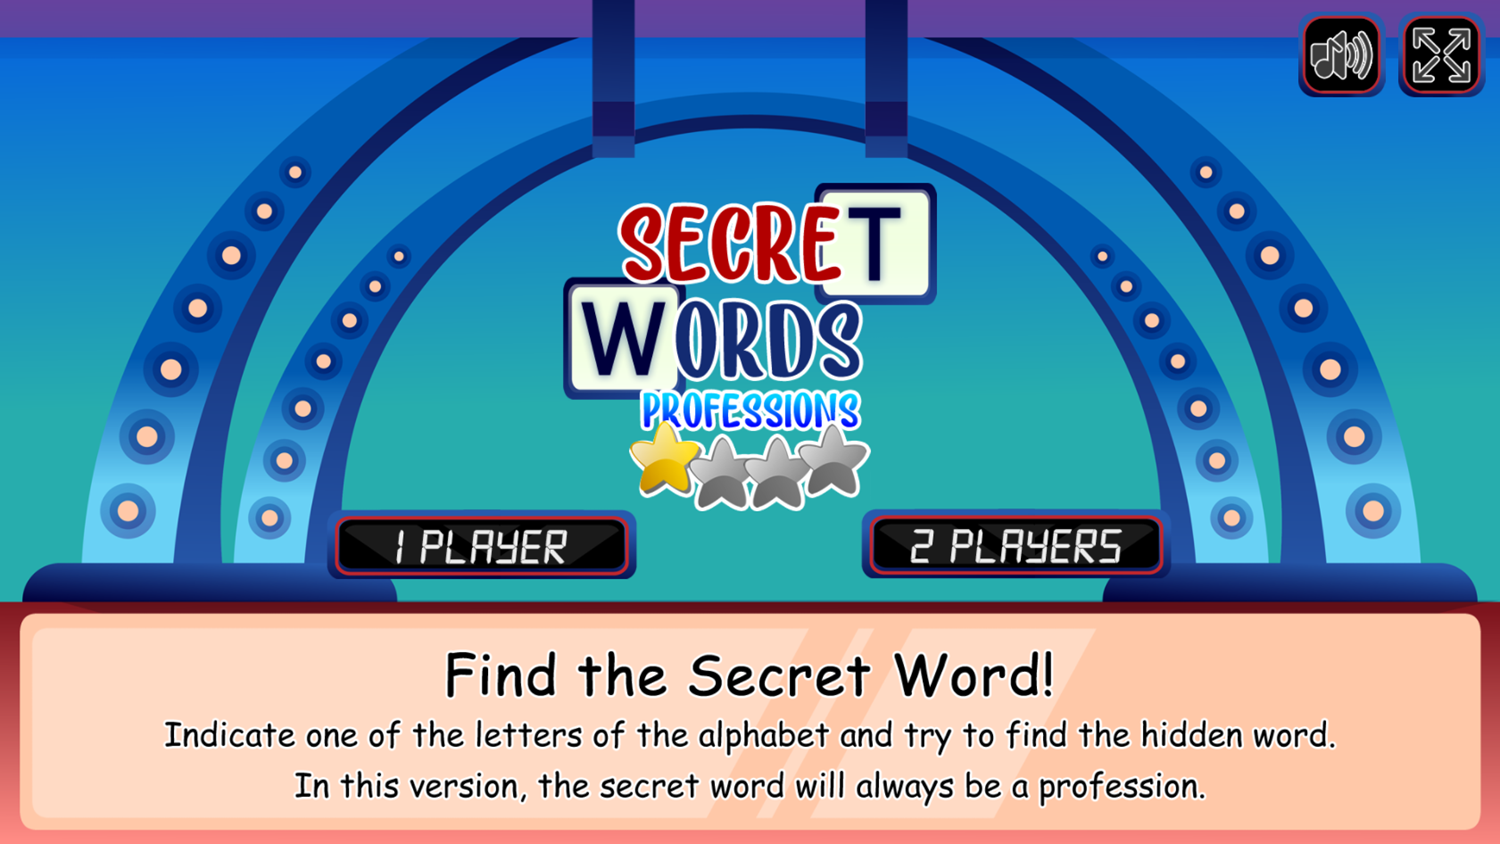 Secret Words Professions Game 1st Start Complete Screenshot.